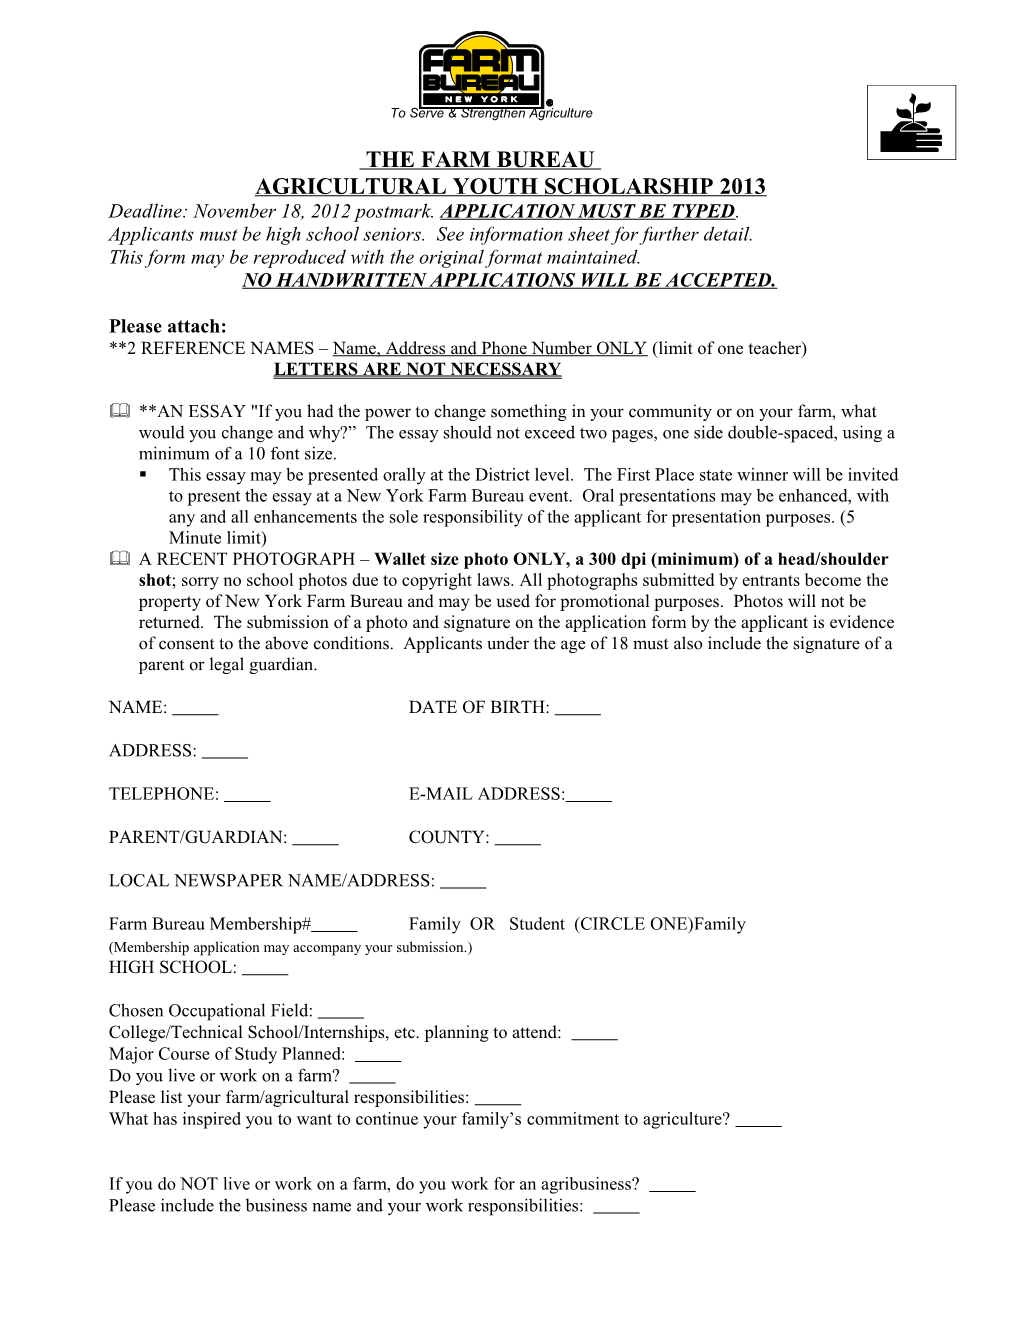 New York Farm Bureau Citizenship Award Application